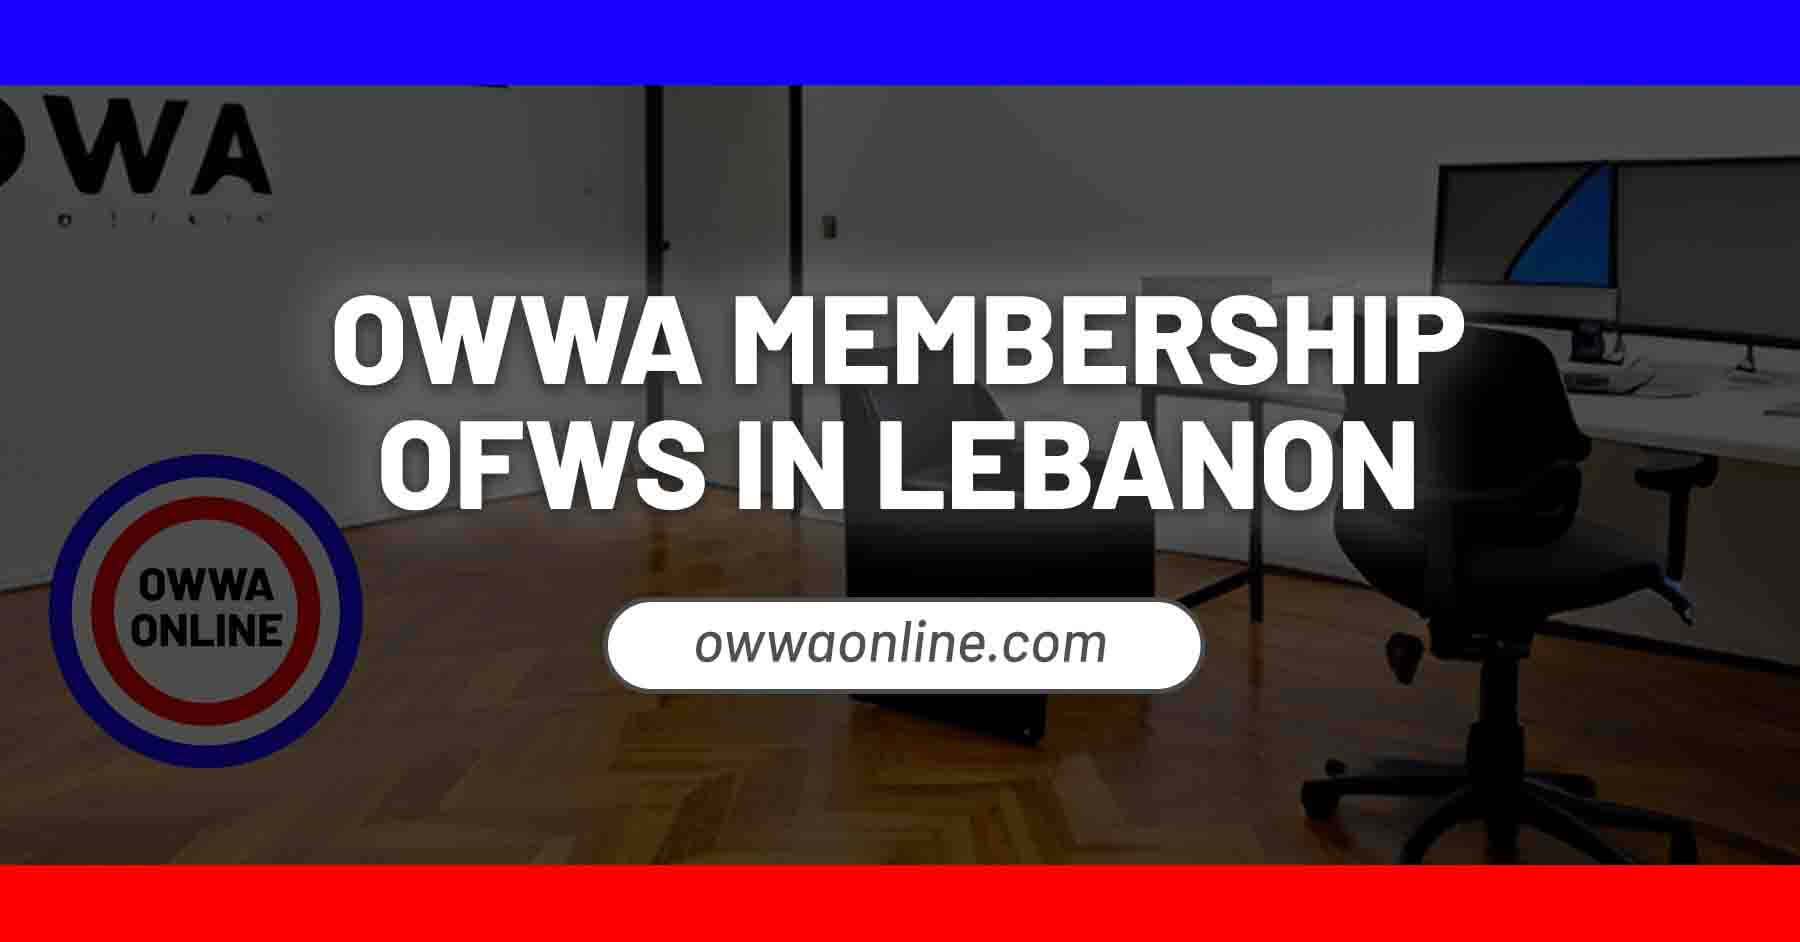 owwa membership application renewal in lebanon